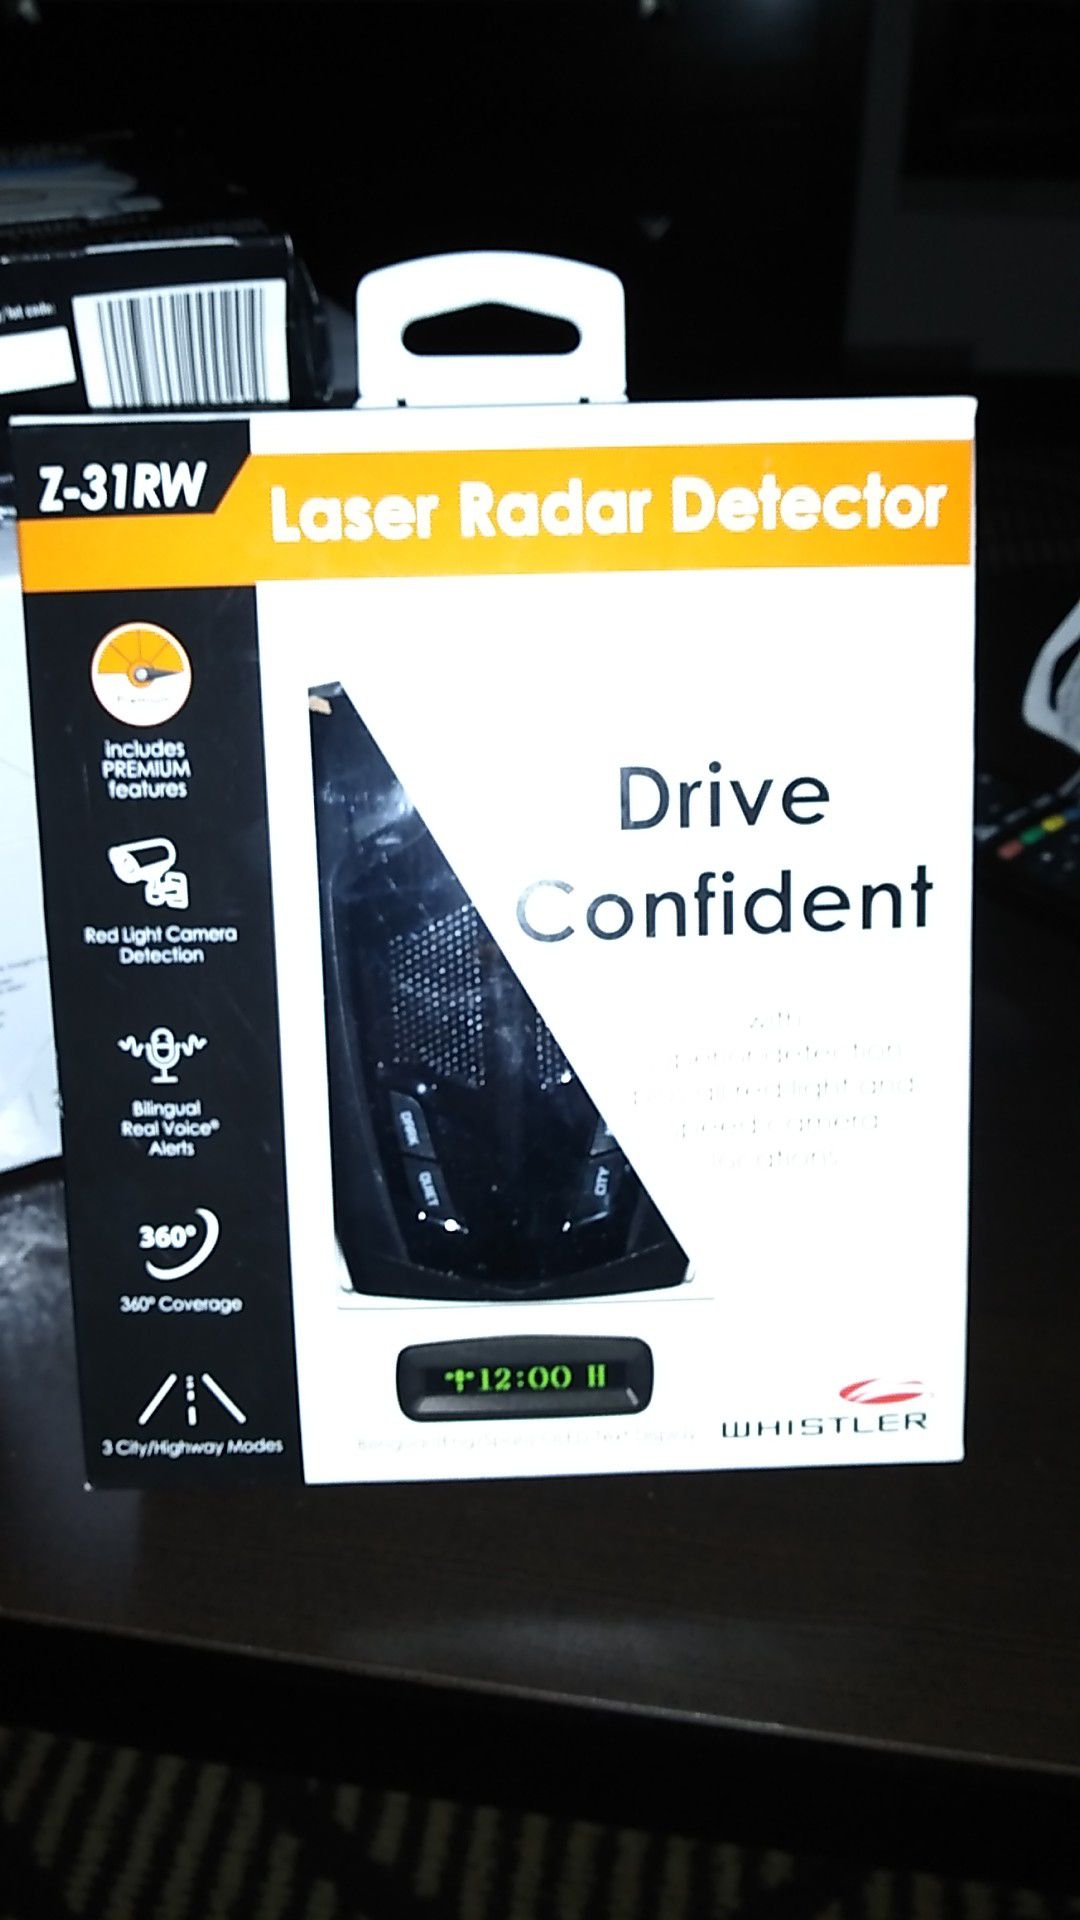 WHISTLER Laser Radar Dectector